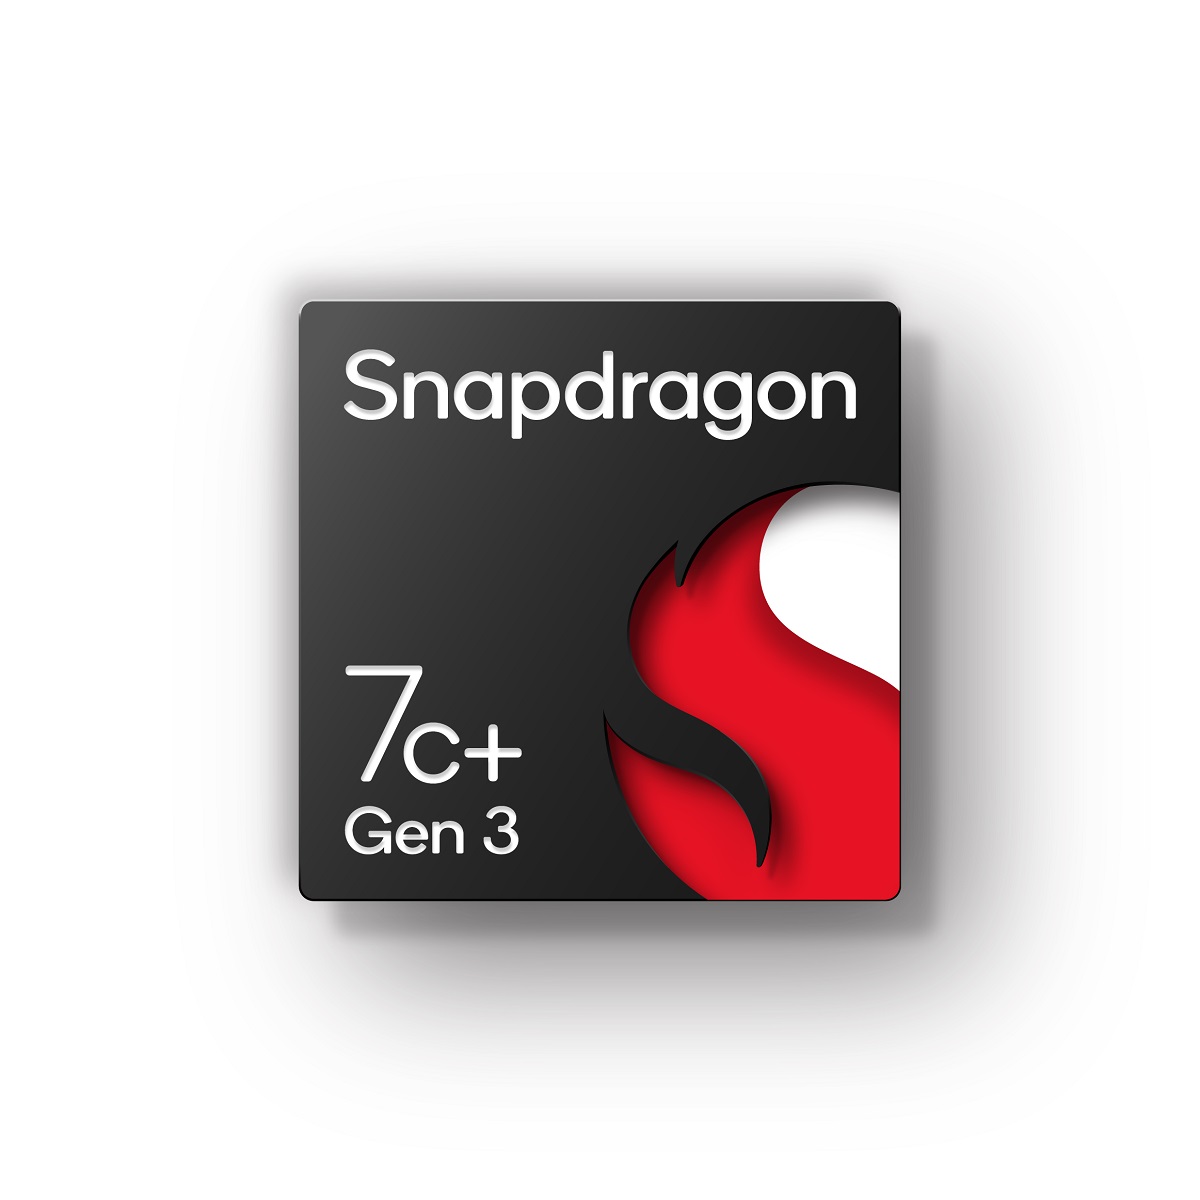 Snapdragon 7c+